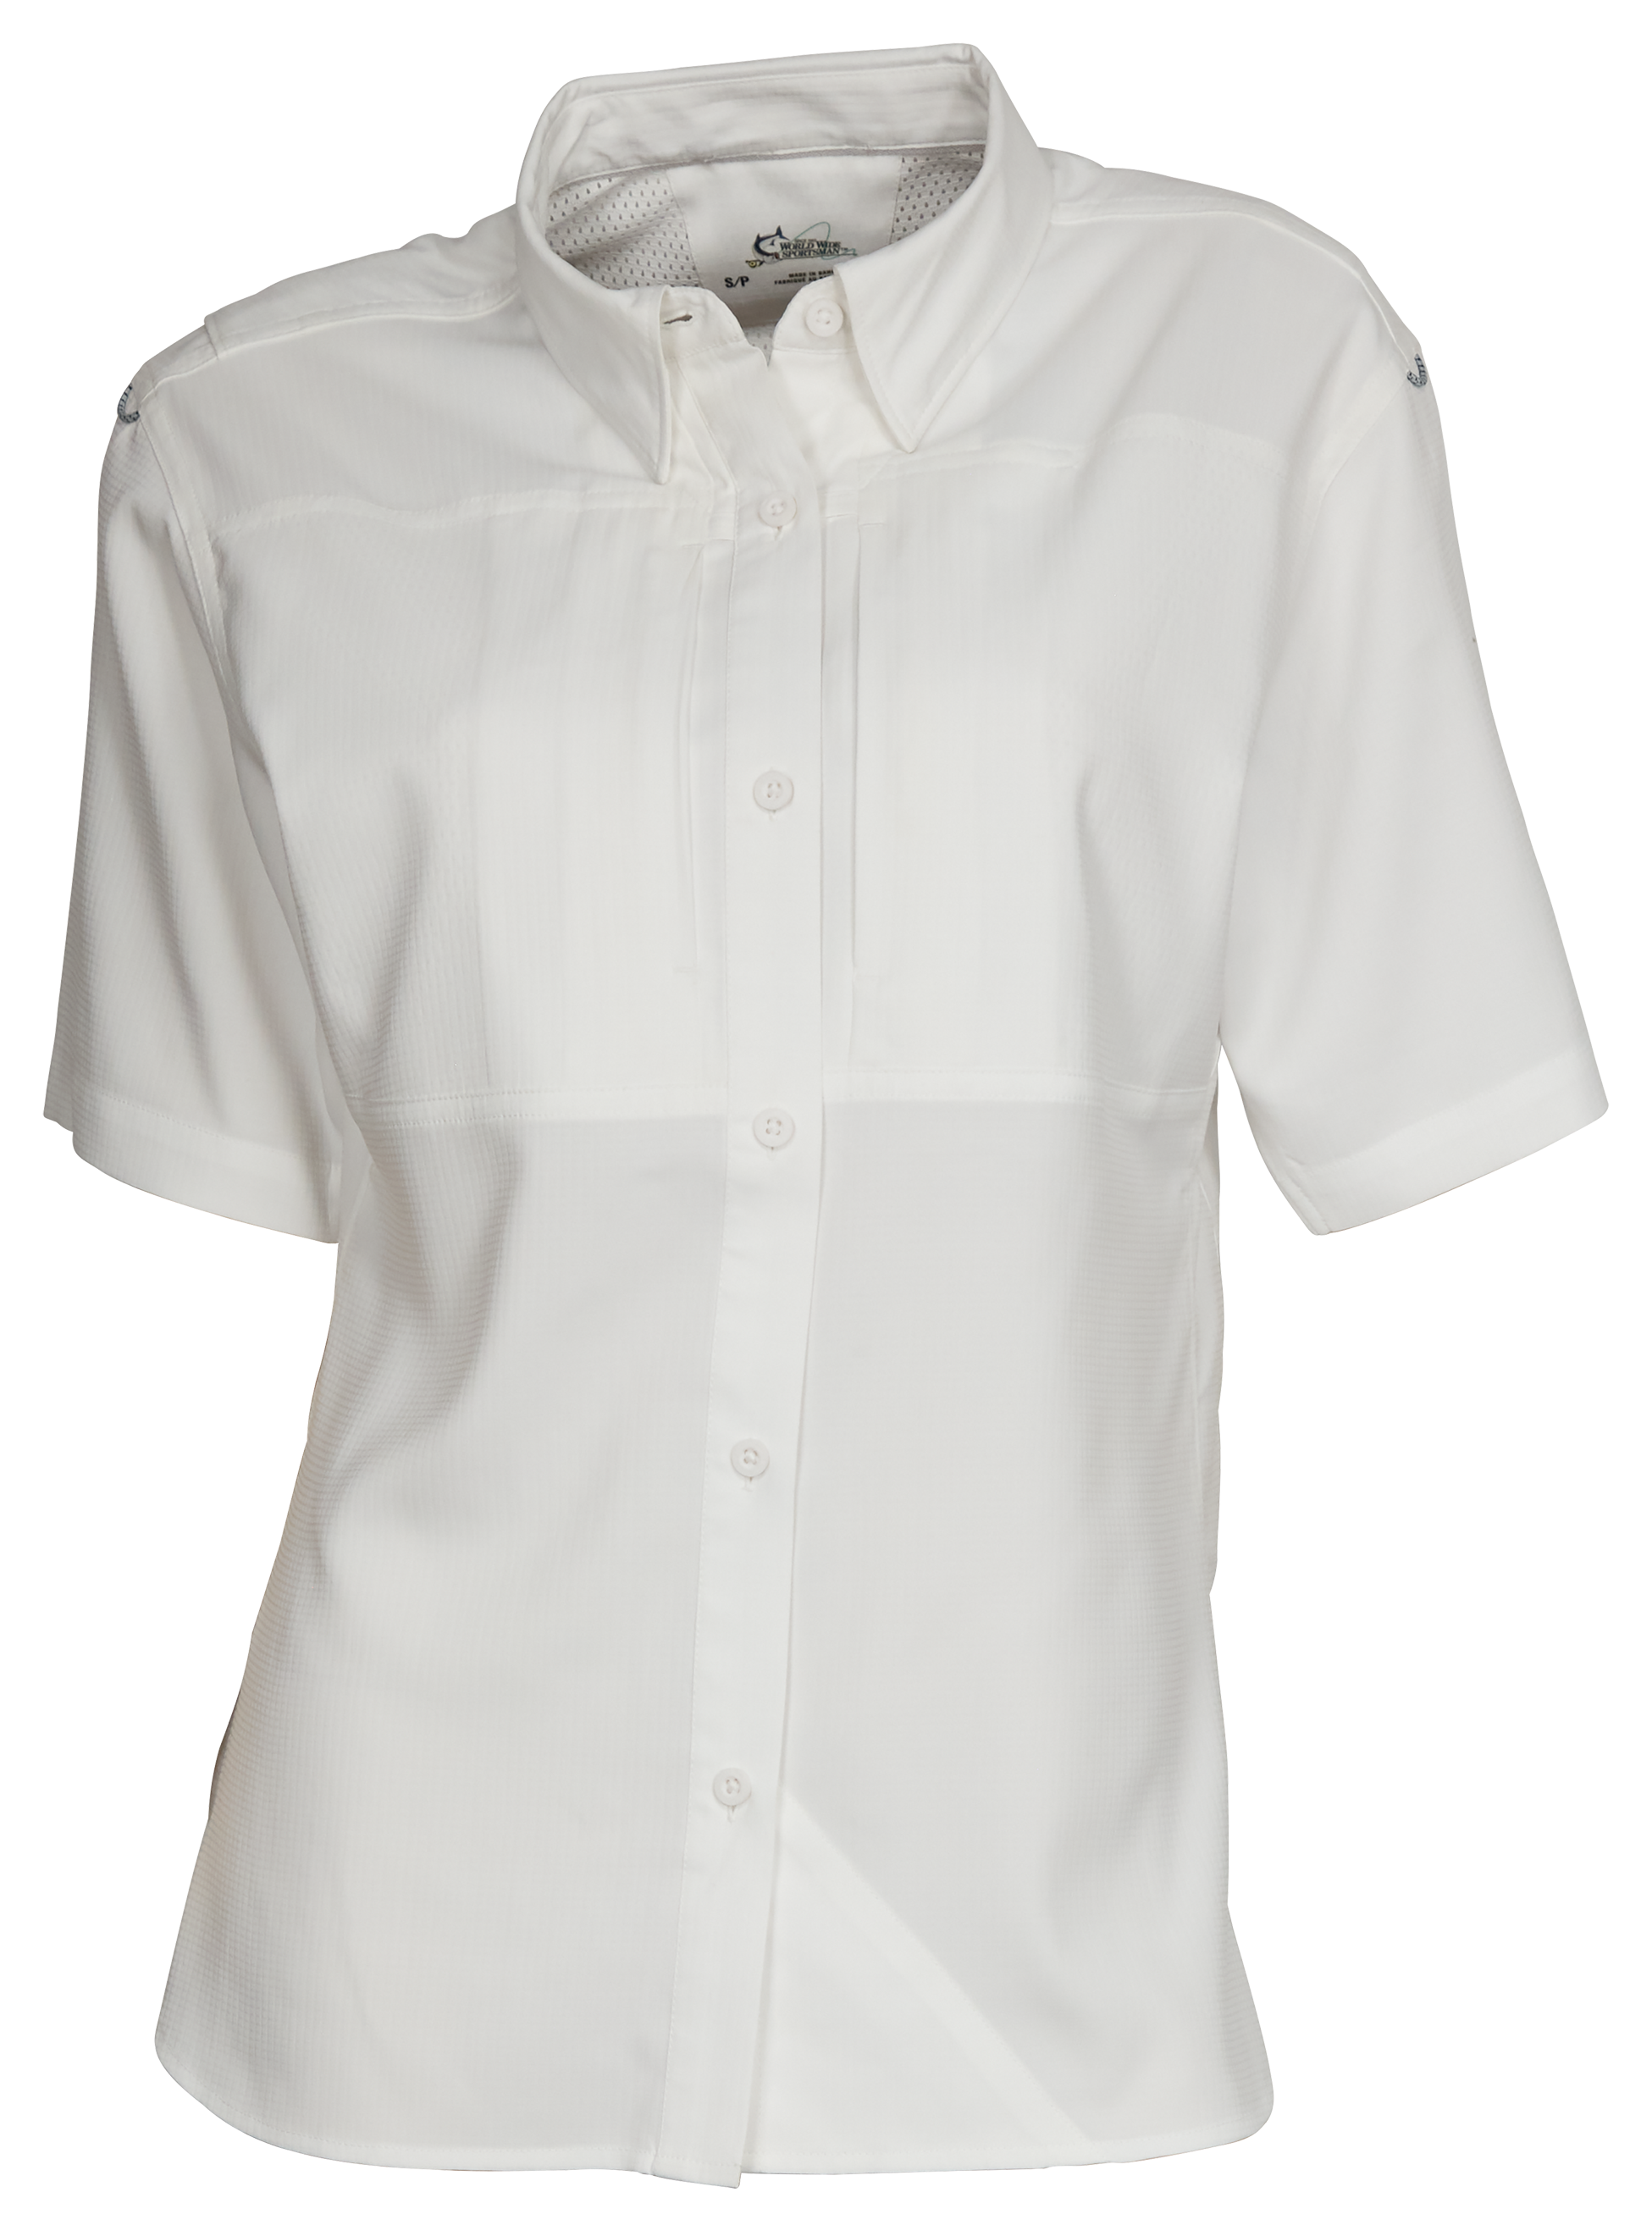 World Wide Sportsman Marina Short-Sleeve Shirt for Ladies - Bright White - S